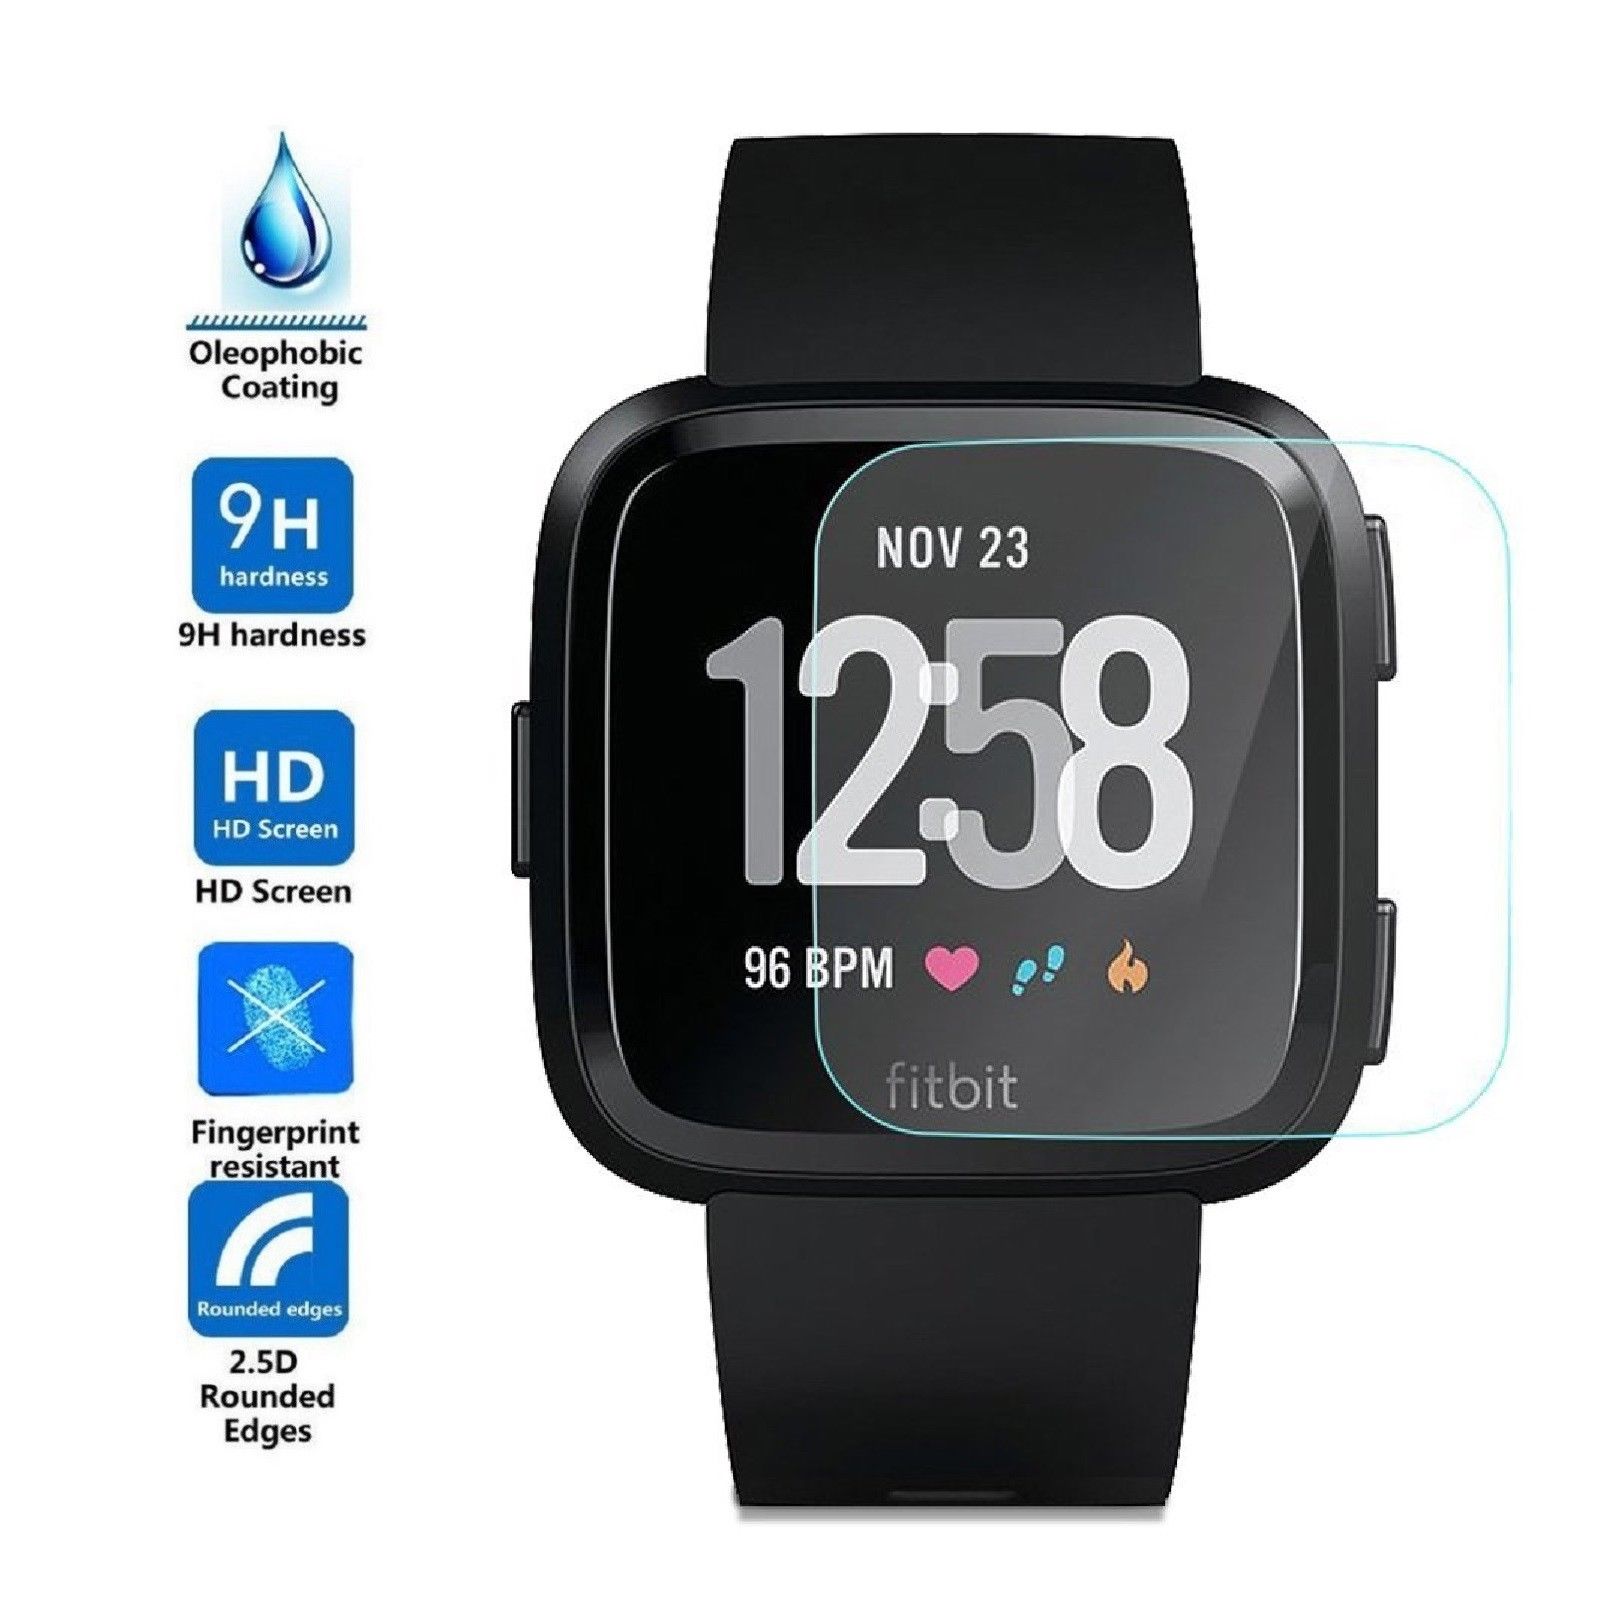 Paquete de 3/6/12 Protector de pantalla de vidrio templado Protector para Fitbit inversa Smart Fitness Watch Tracker Premium